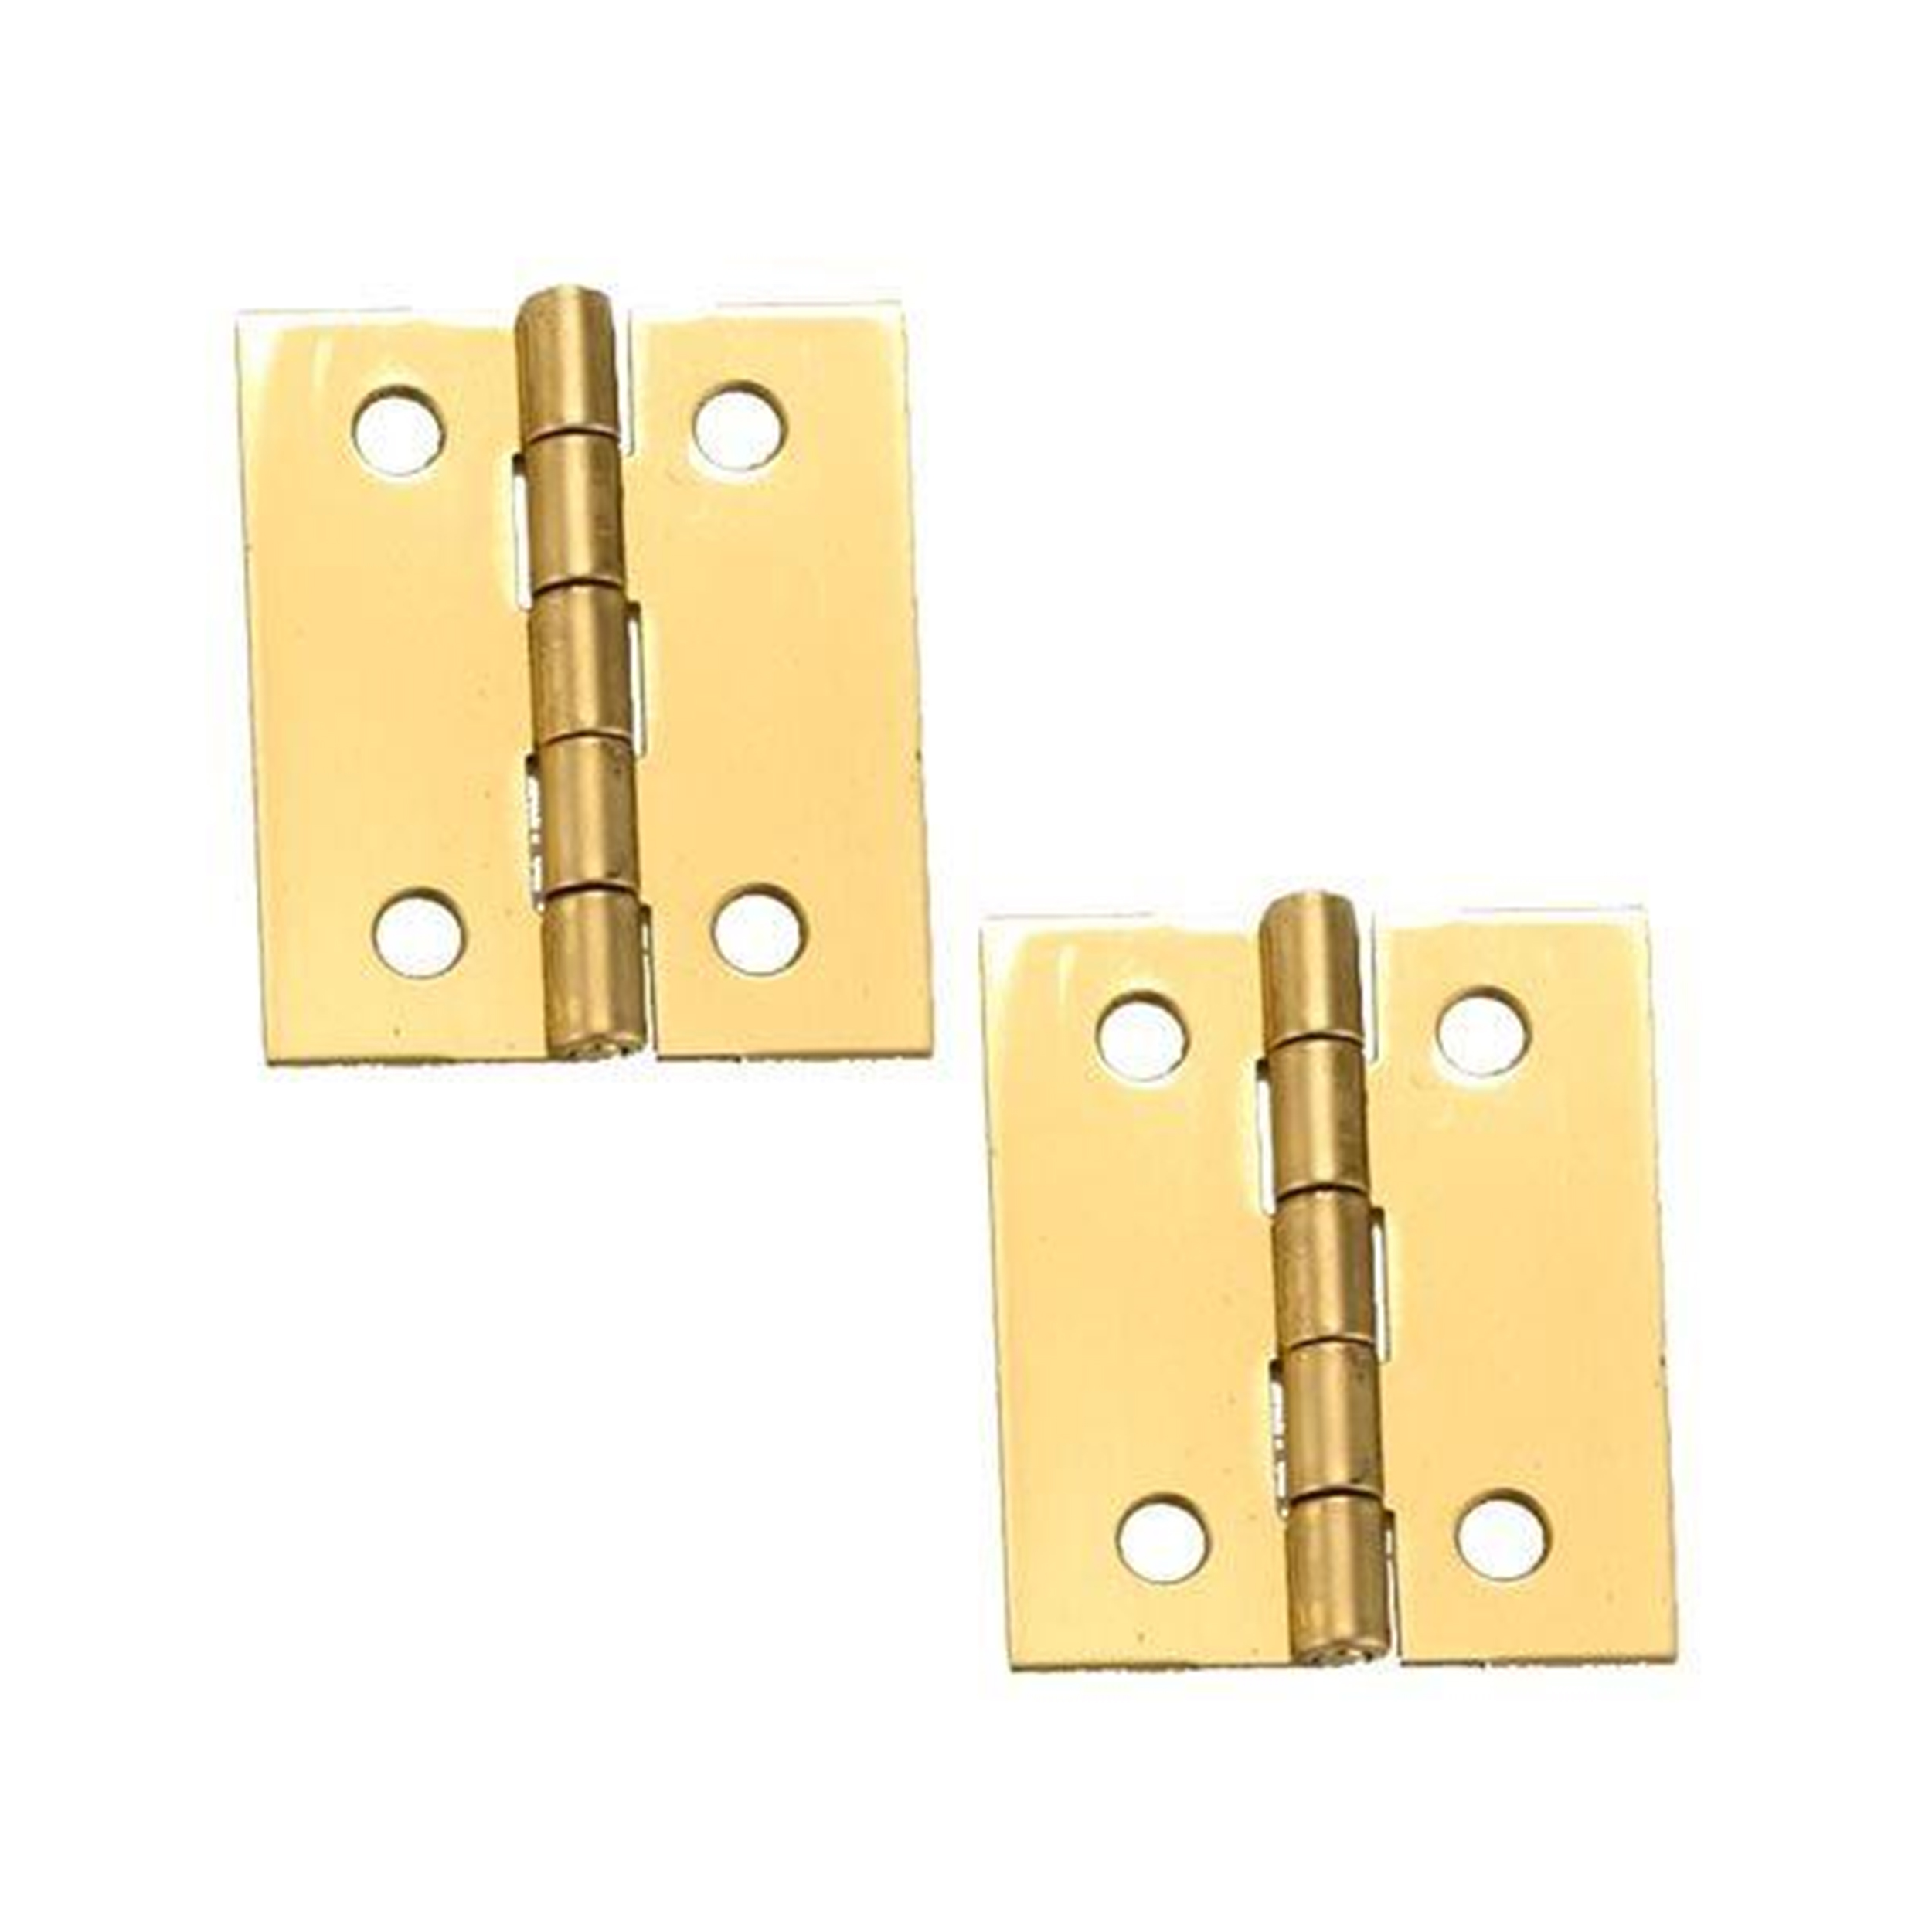 Solid Brass Miniature Broad Hinge 1-1/2" Long X 1-1/4" Open W/screws, Pair